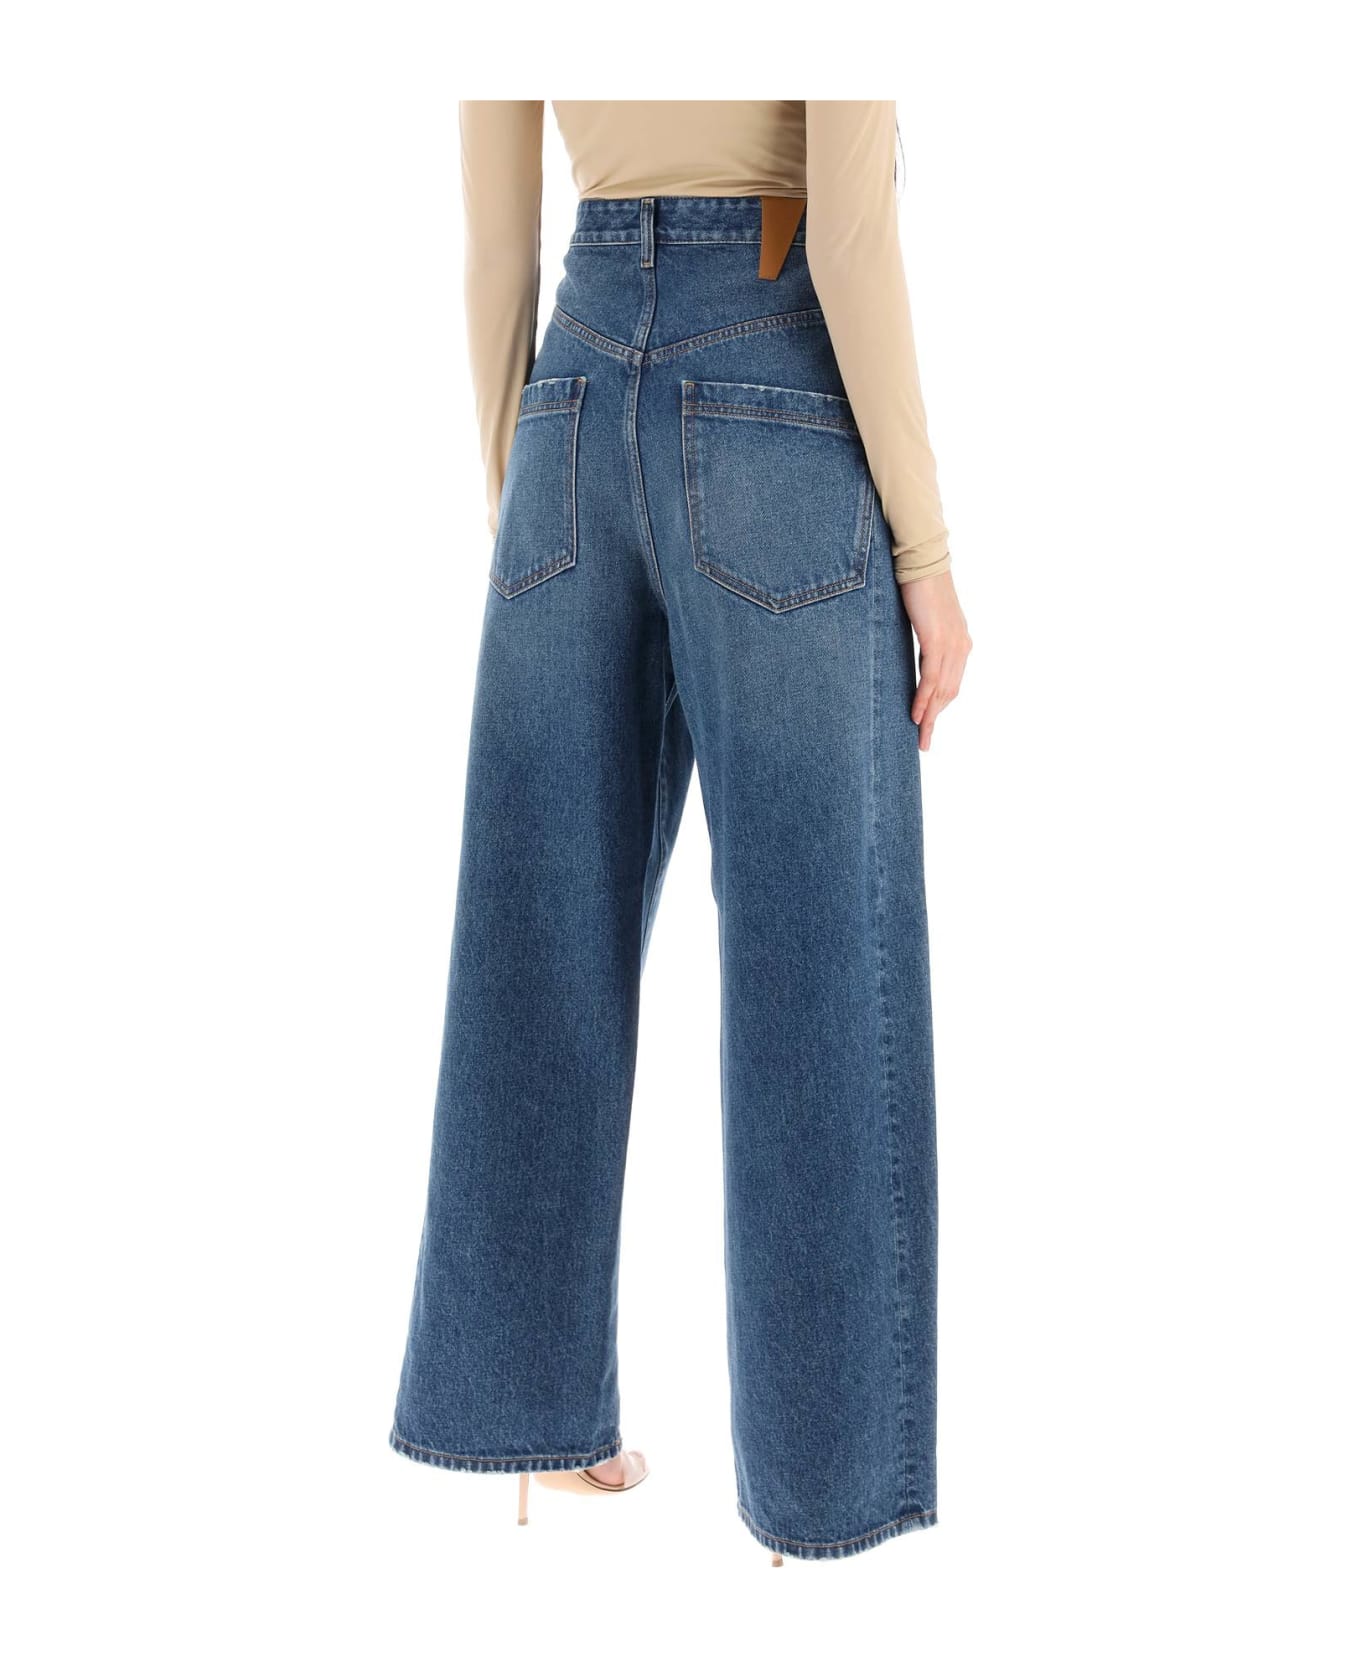 DARKPARK 'ines' Baggy Jeans With Folded Waistband - MEDIUM WASH (Light blue)